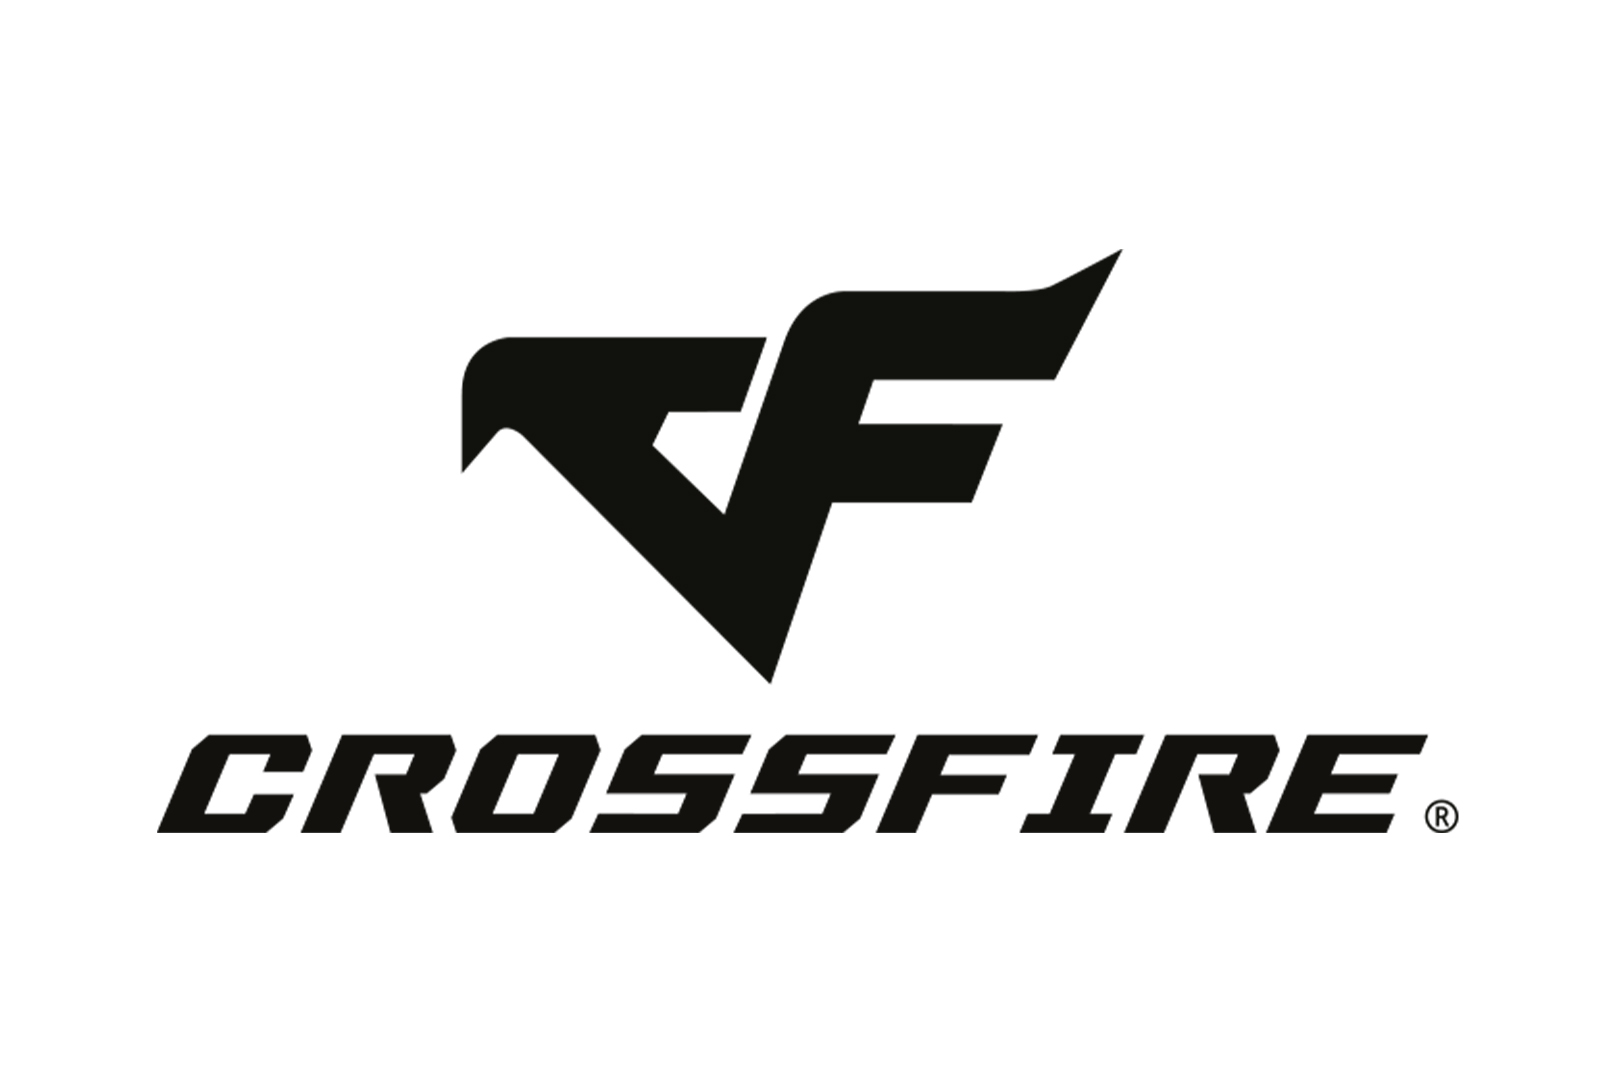 2022-07-01-04-46-27-crossfire-logo.jpg